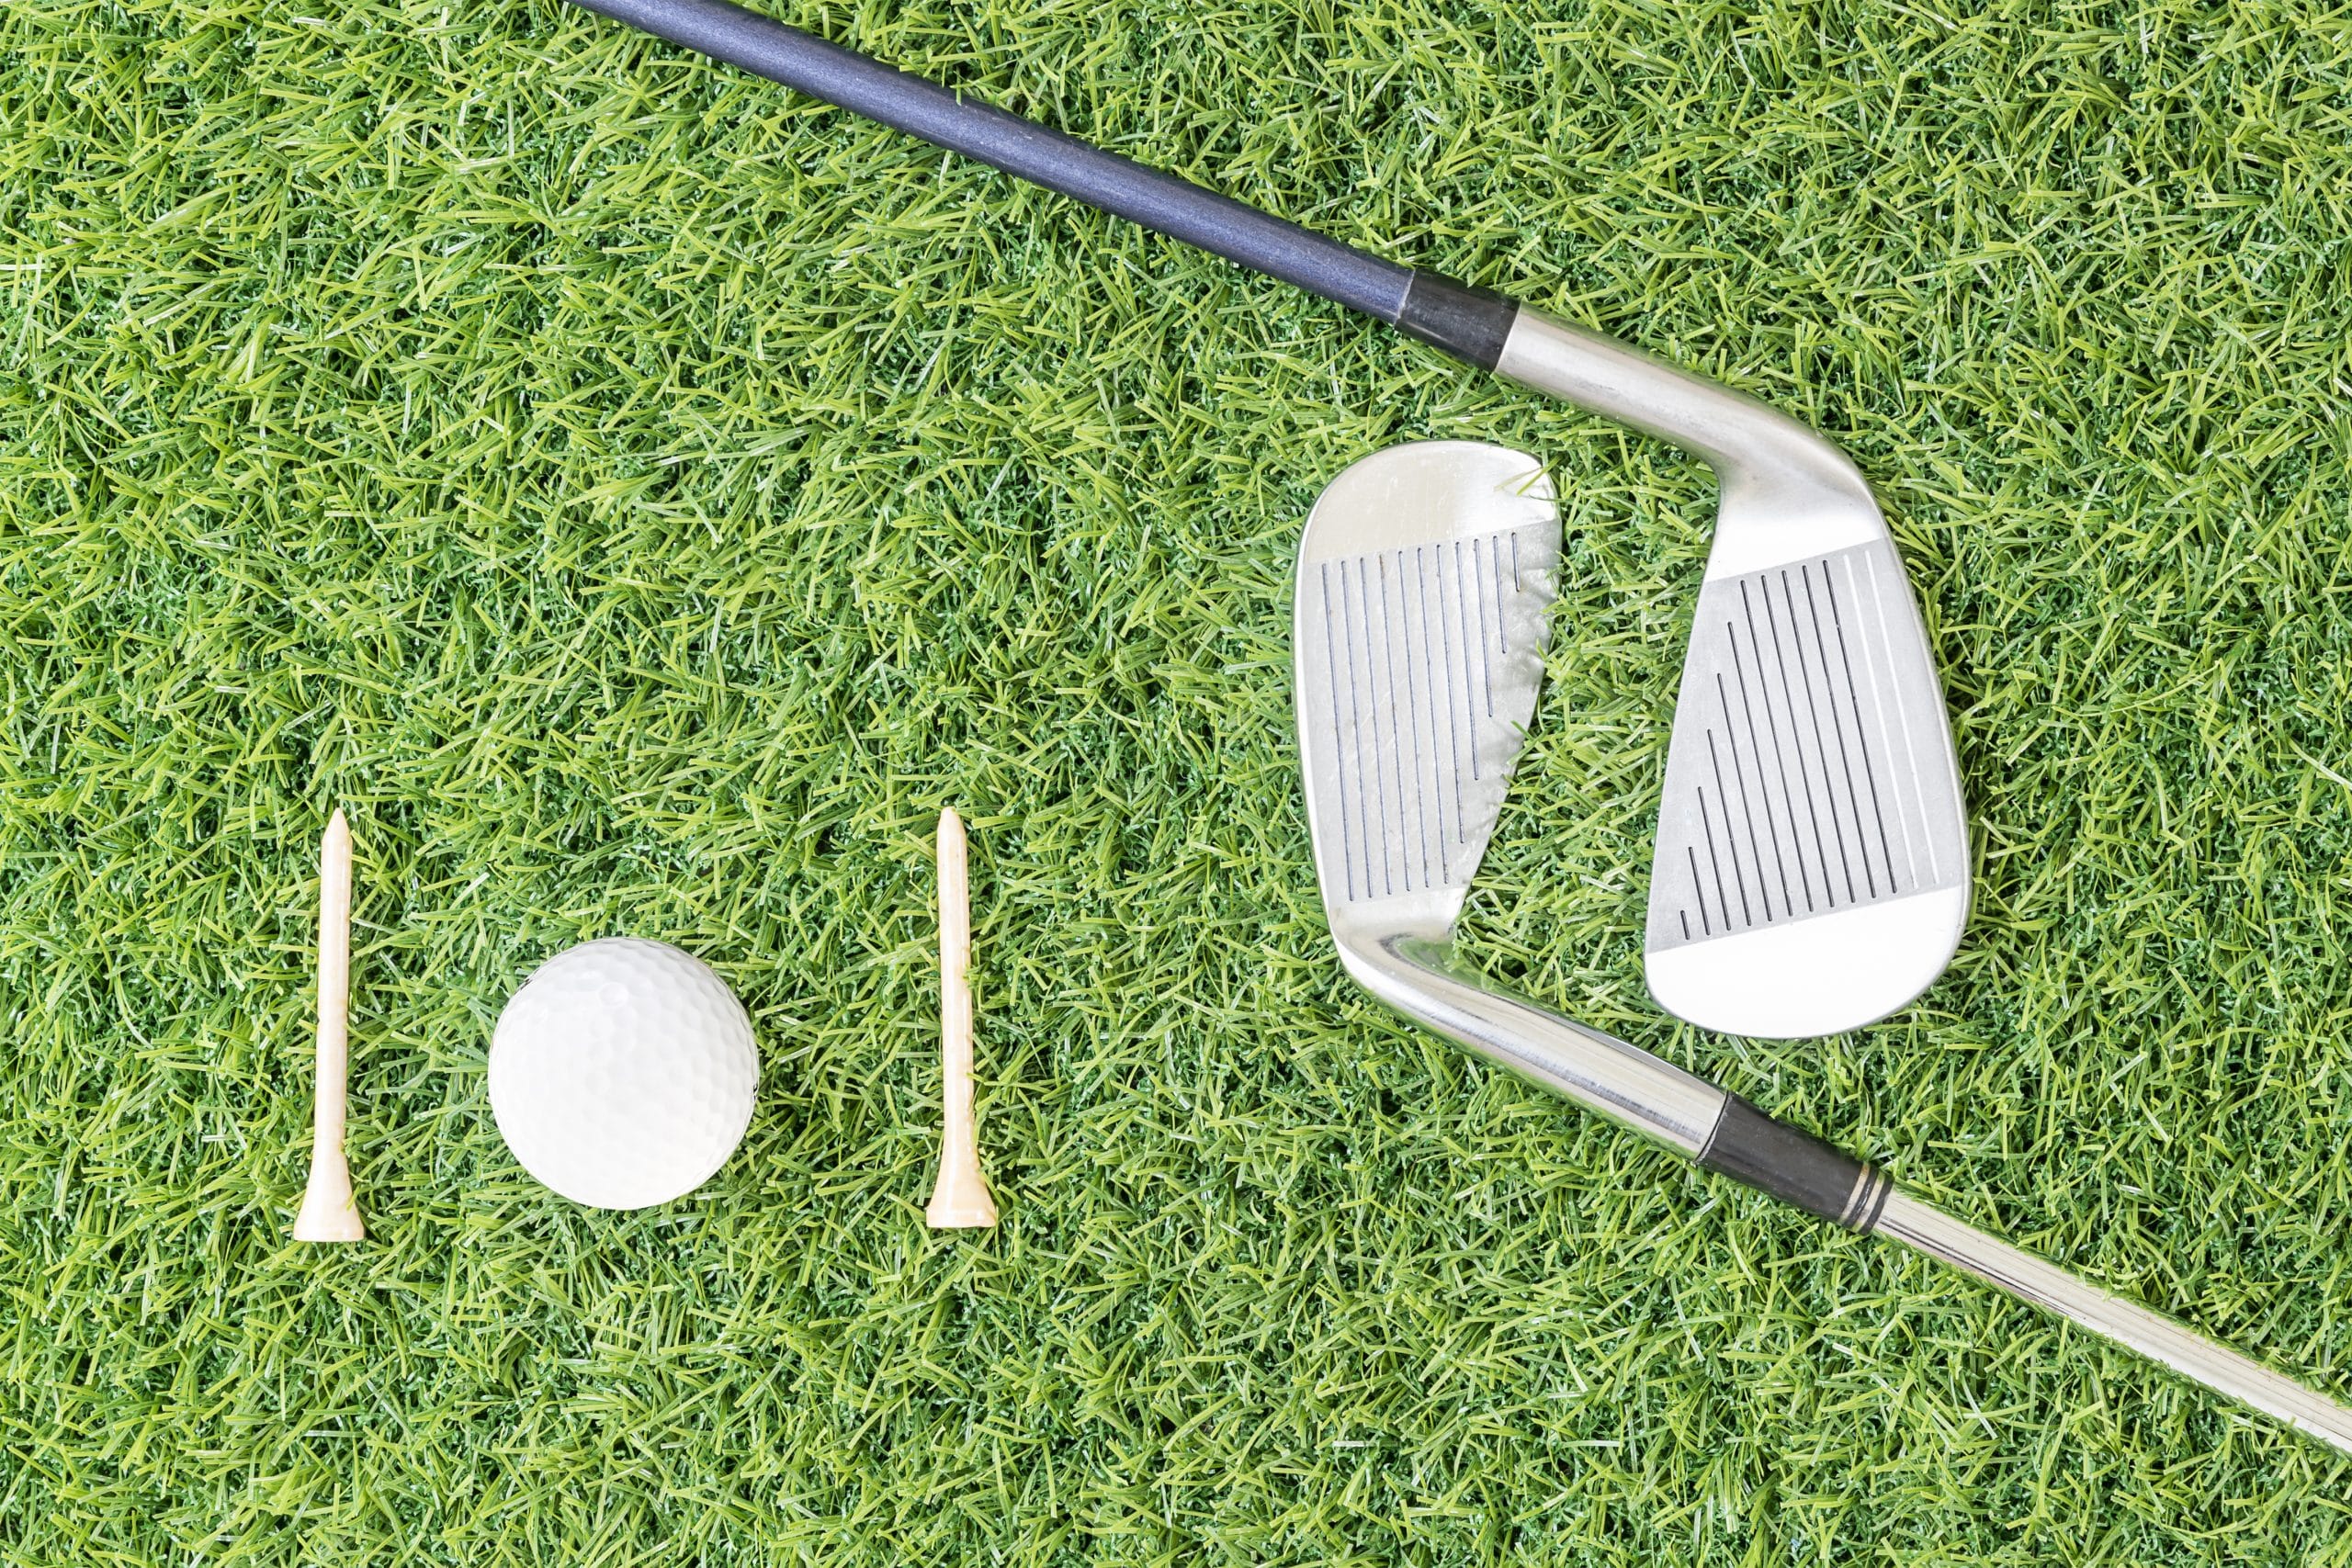 The Minimum Number of Clubs in Golf Bag - Costa Del Sol Golf Club